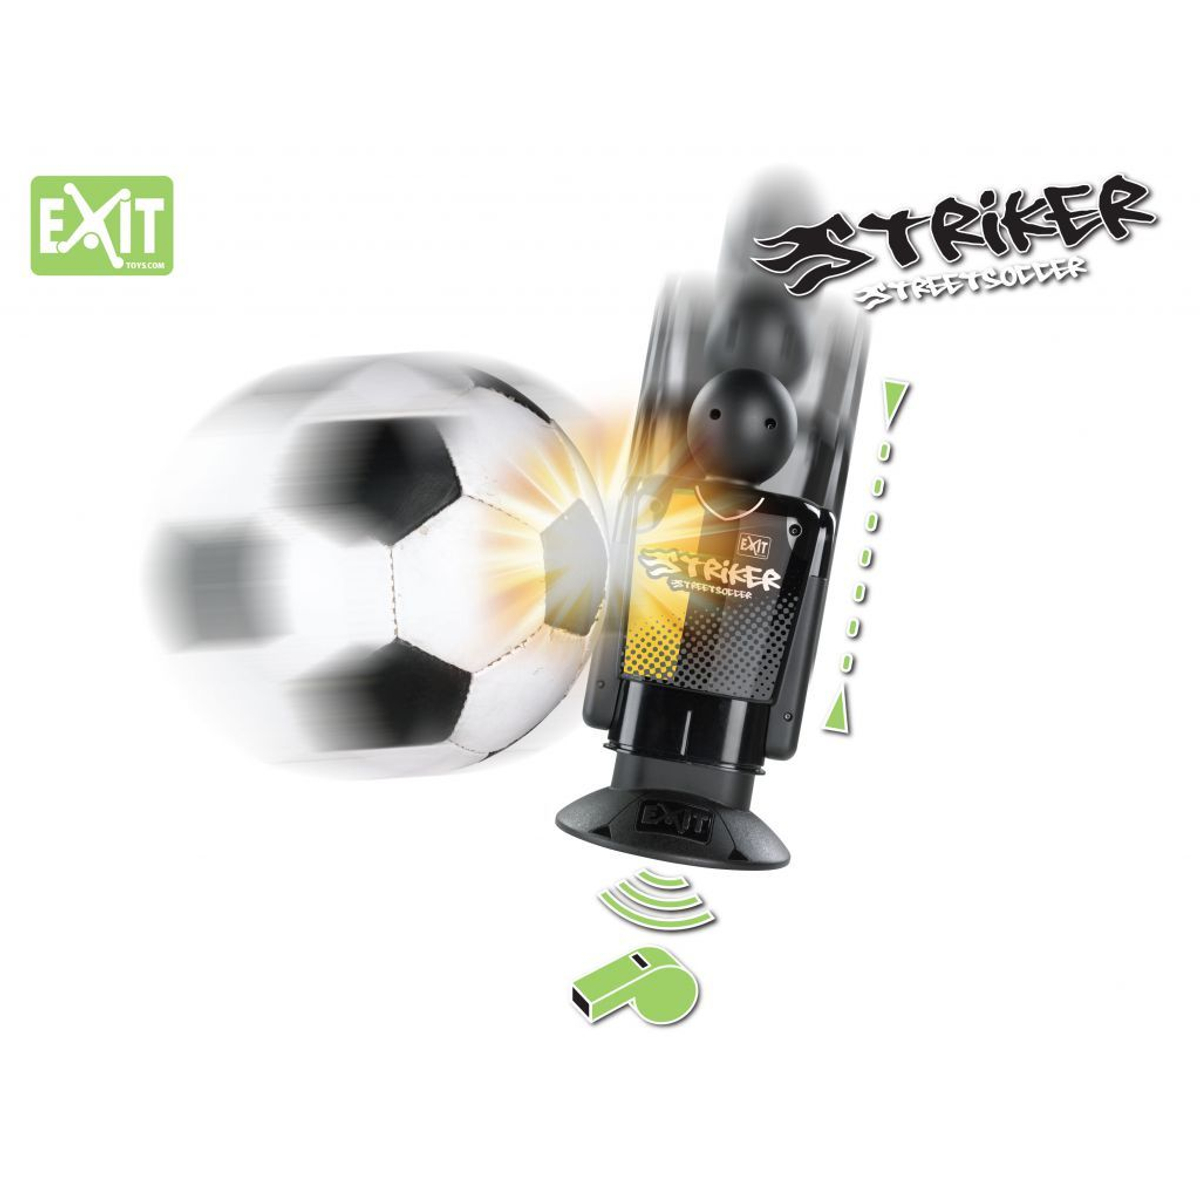 Exit Striker Streetsoccer - Set van 2